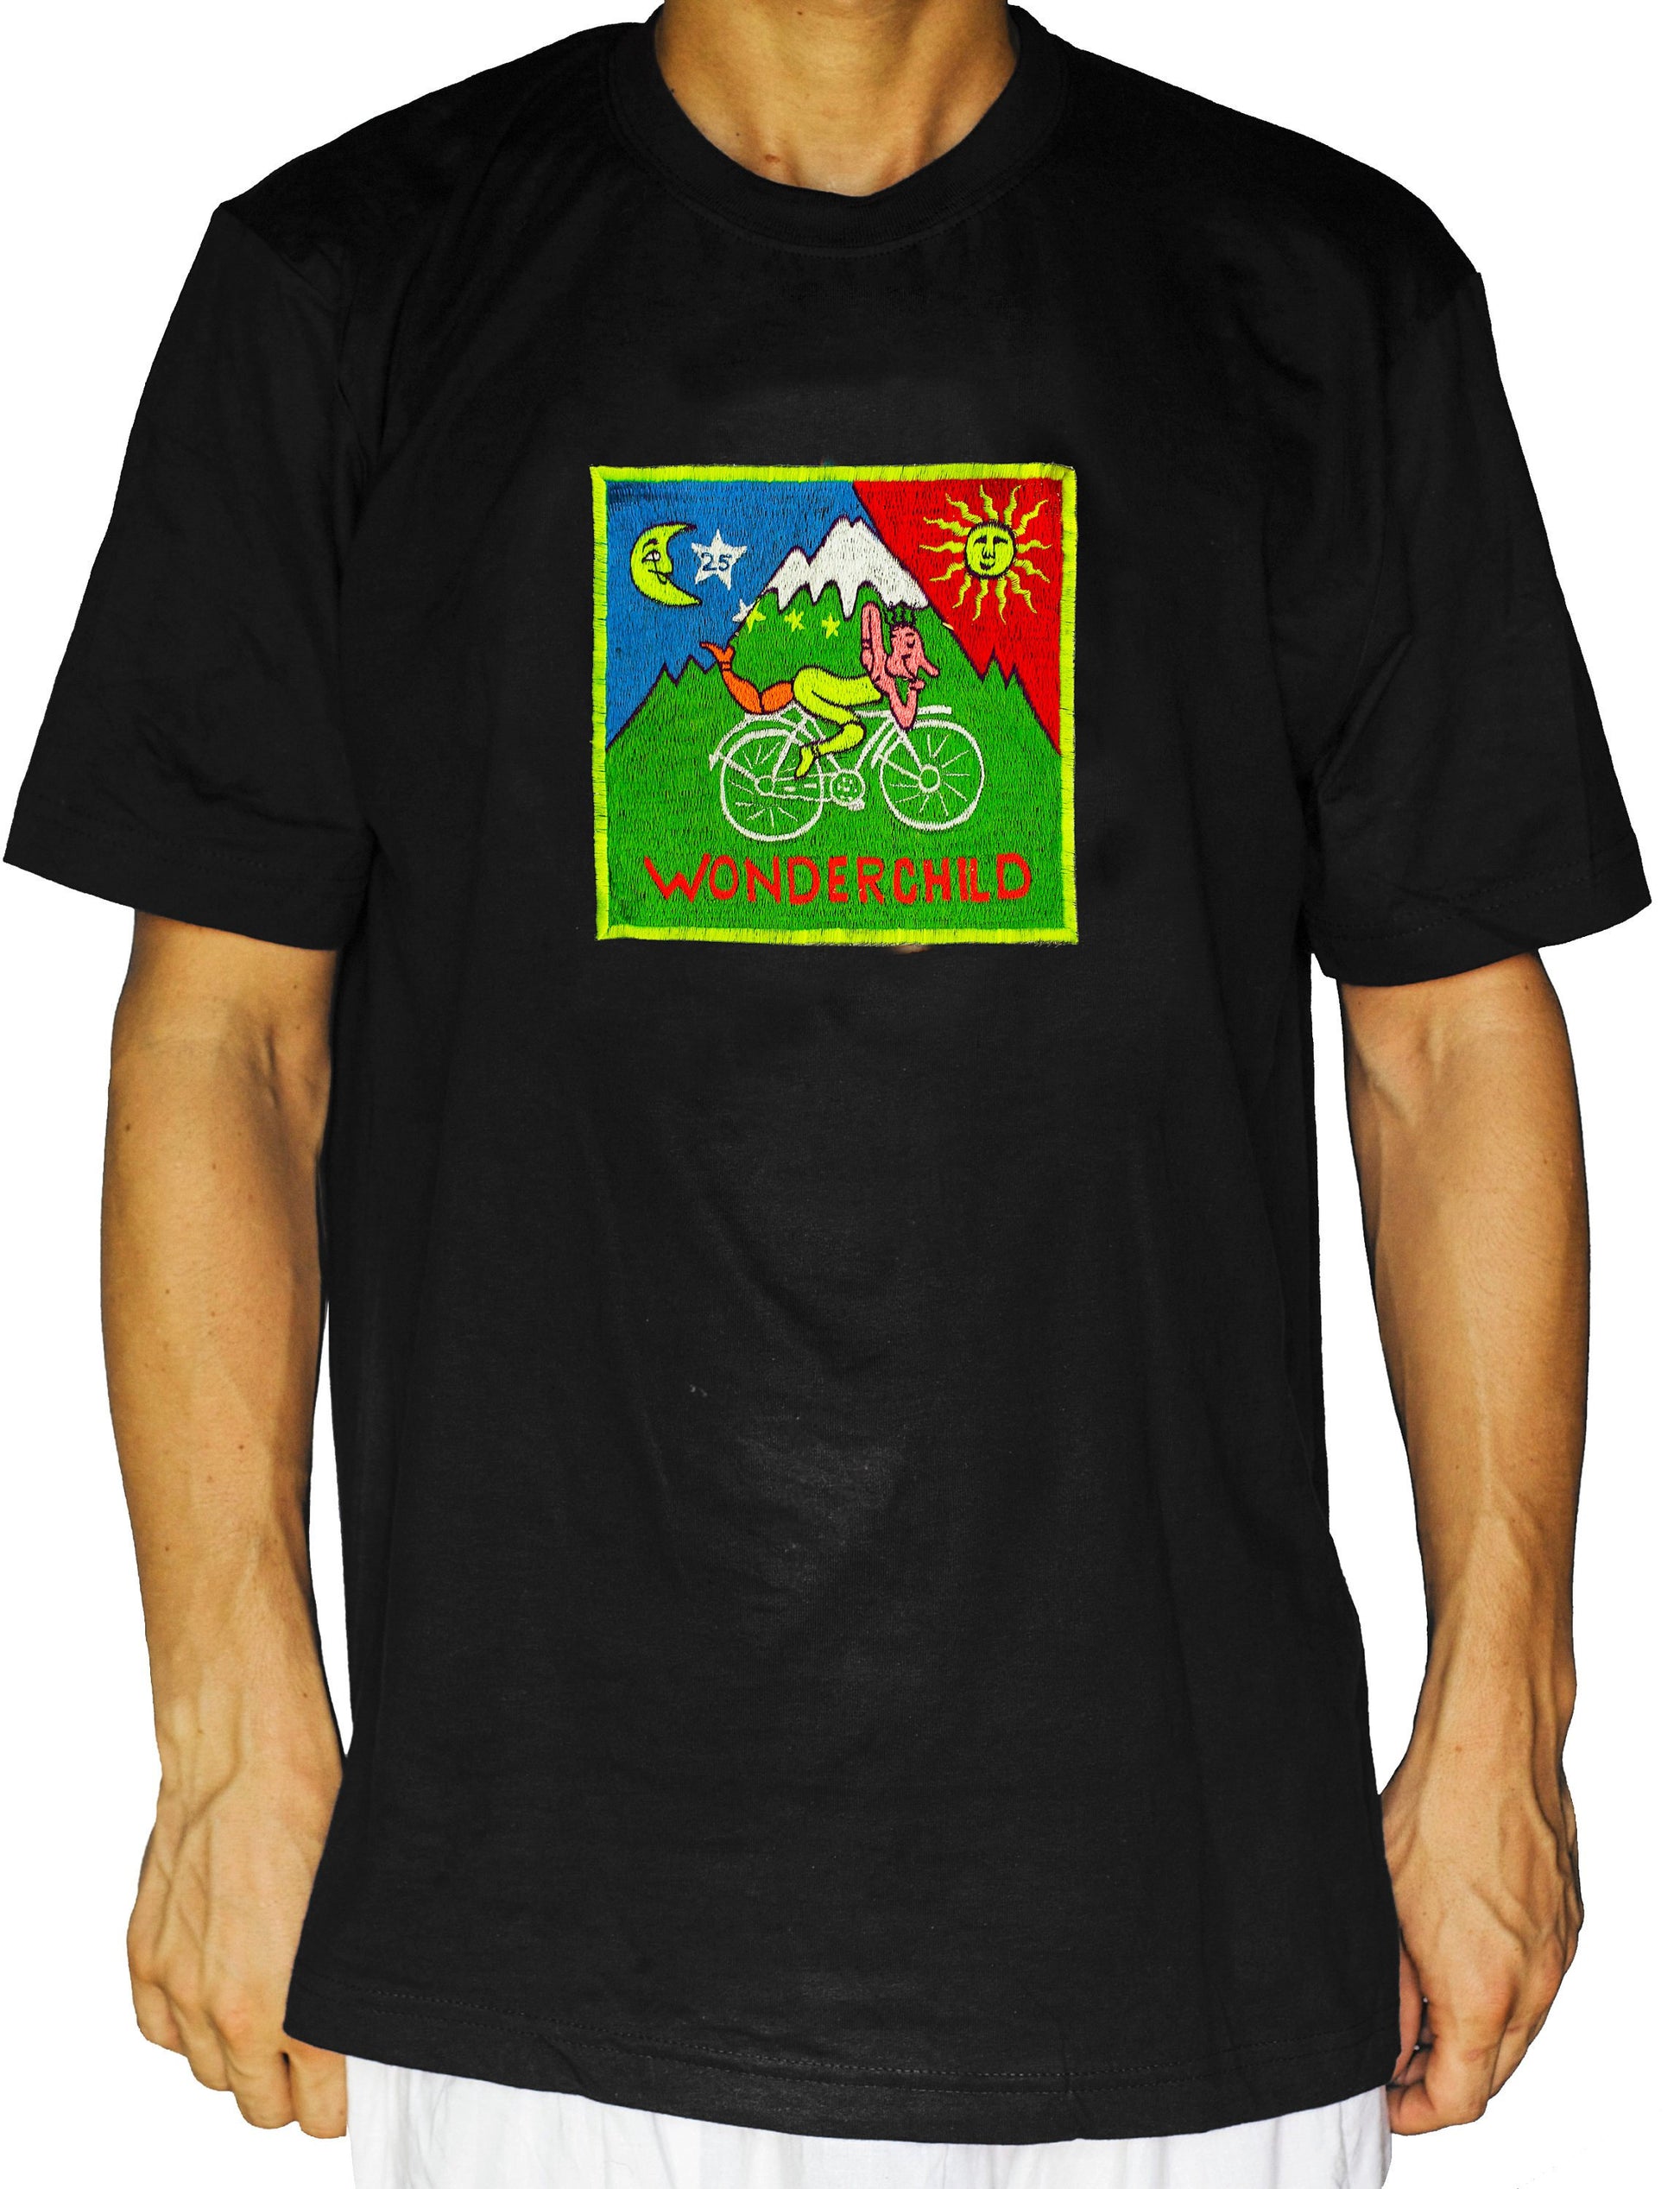 Wonderchild LSD T-Shirt Hofmann Bicycle Day blacklight handmade embroidery no print goa t-shirt Timothy Leary vintage LSD25 discovery art